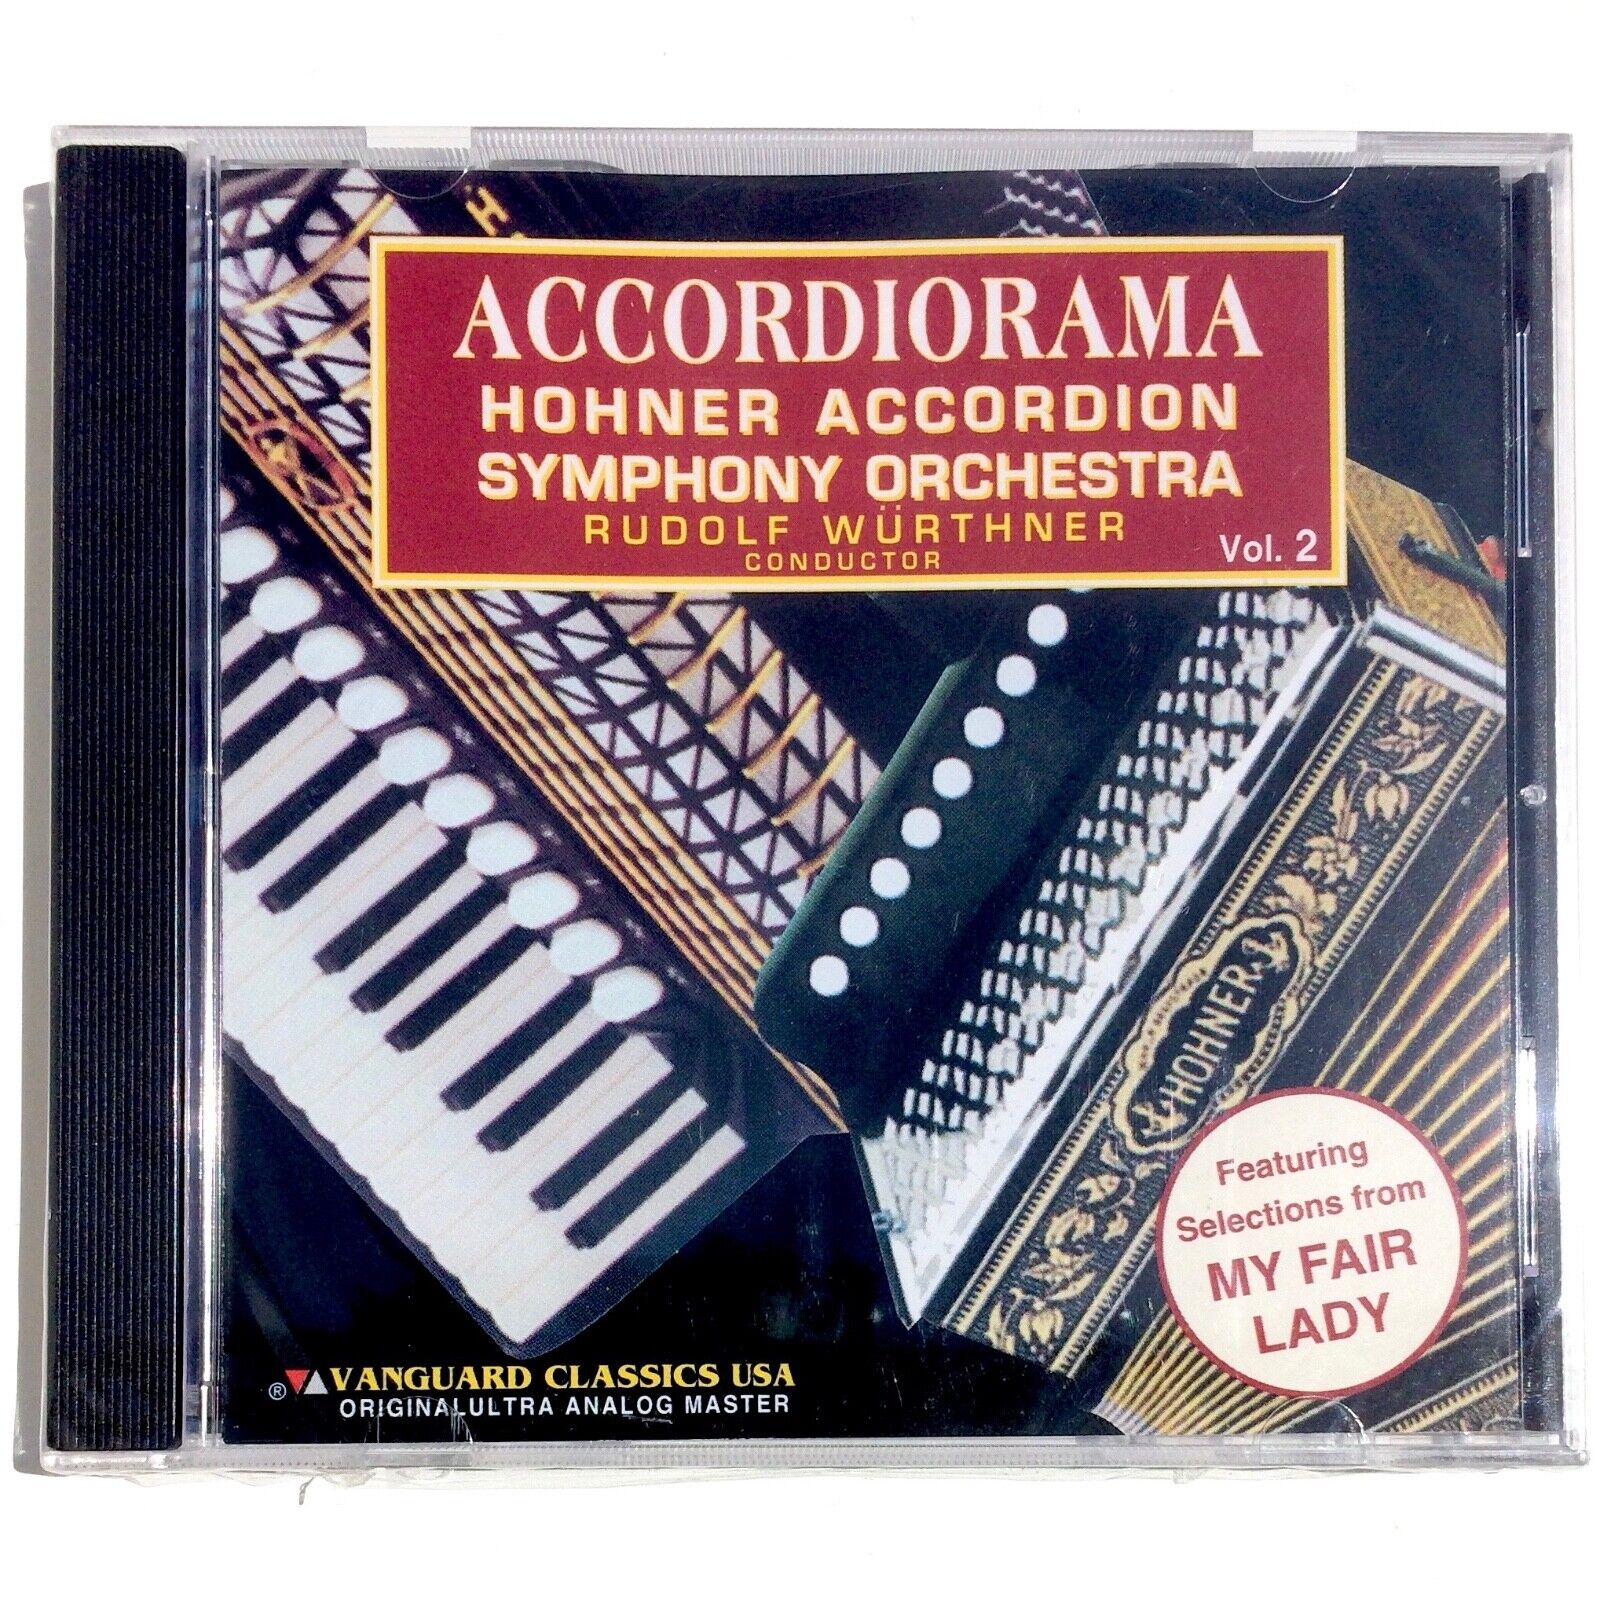 Accordiorama Vol.2 CD by Hohner Accordion Symphony Orchestra UPC 717794812527